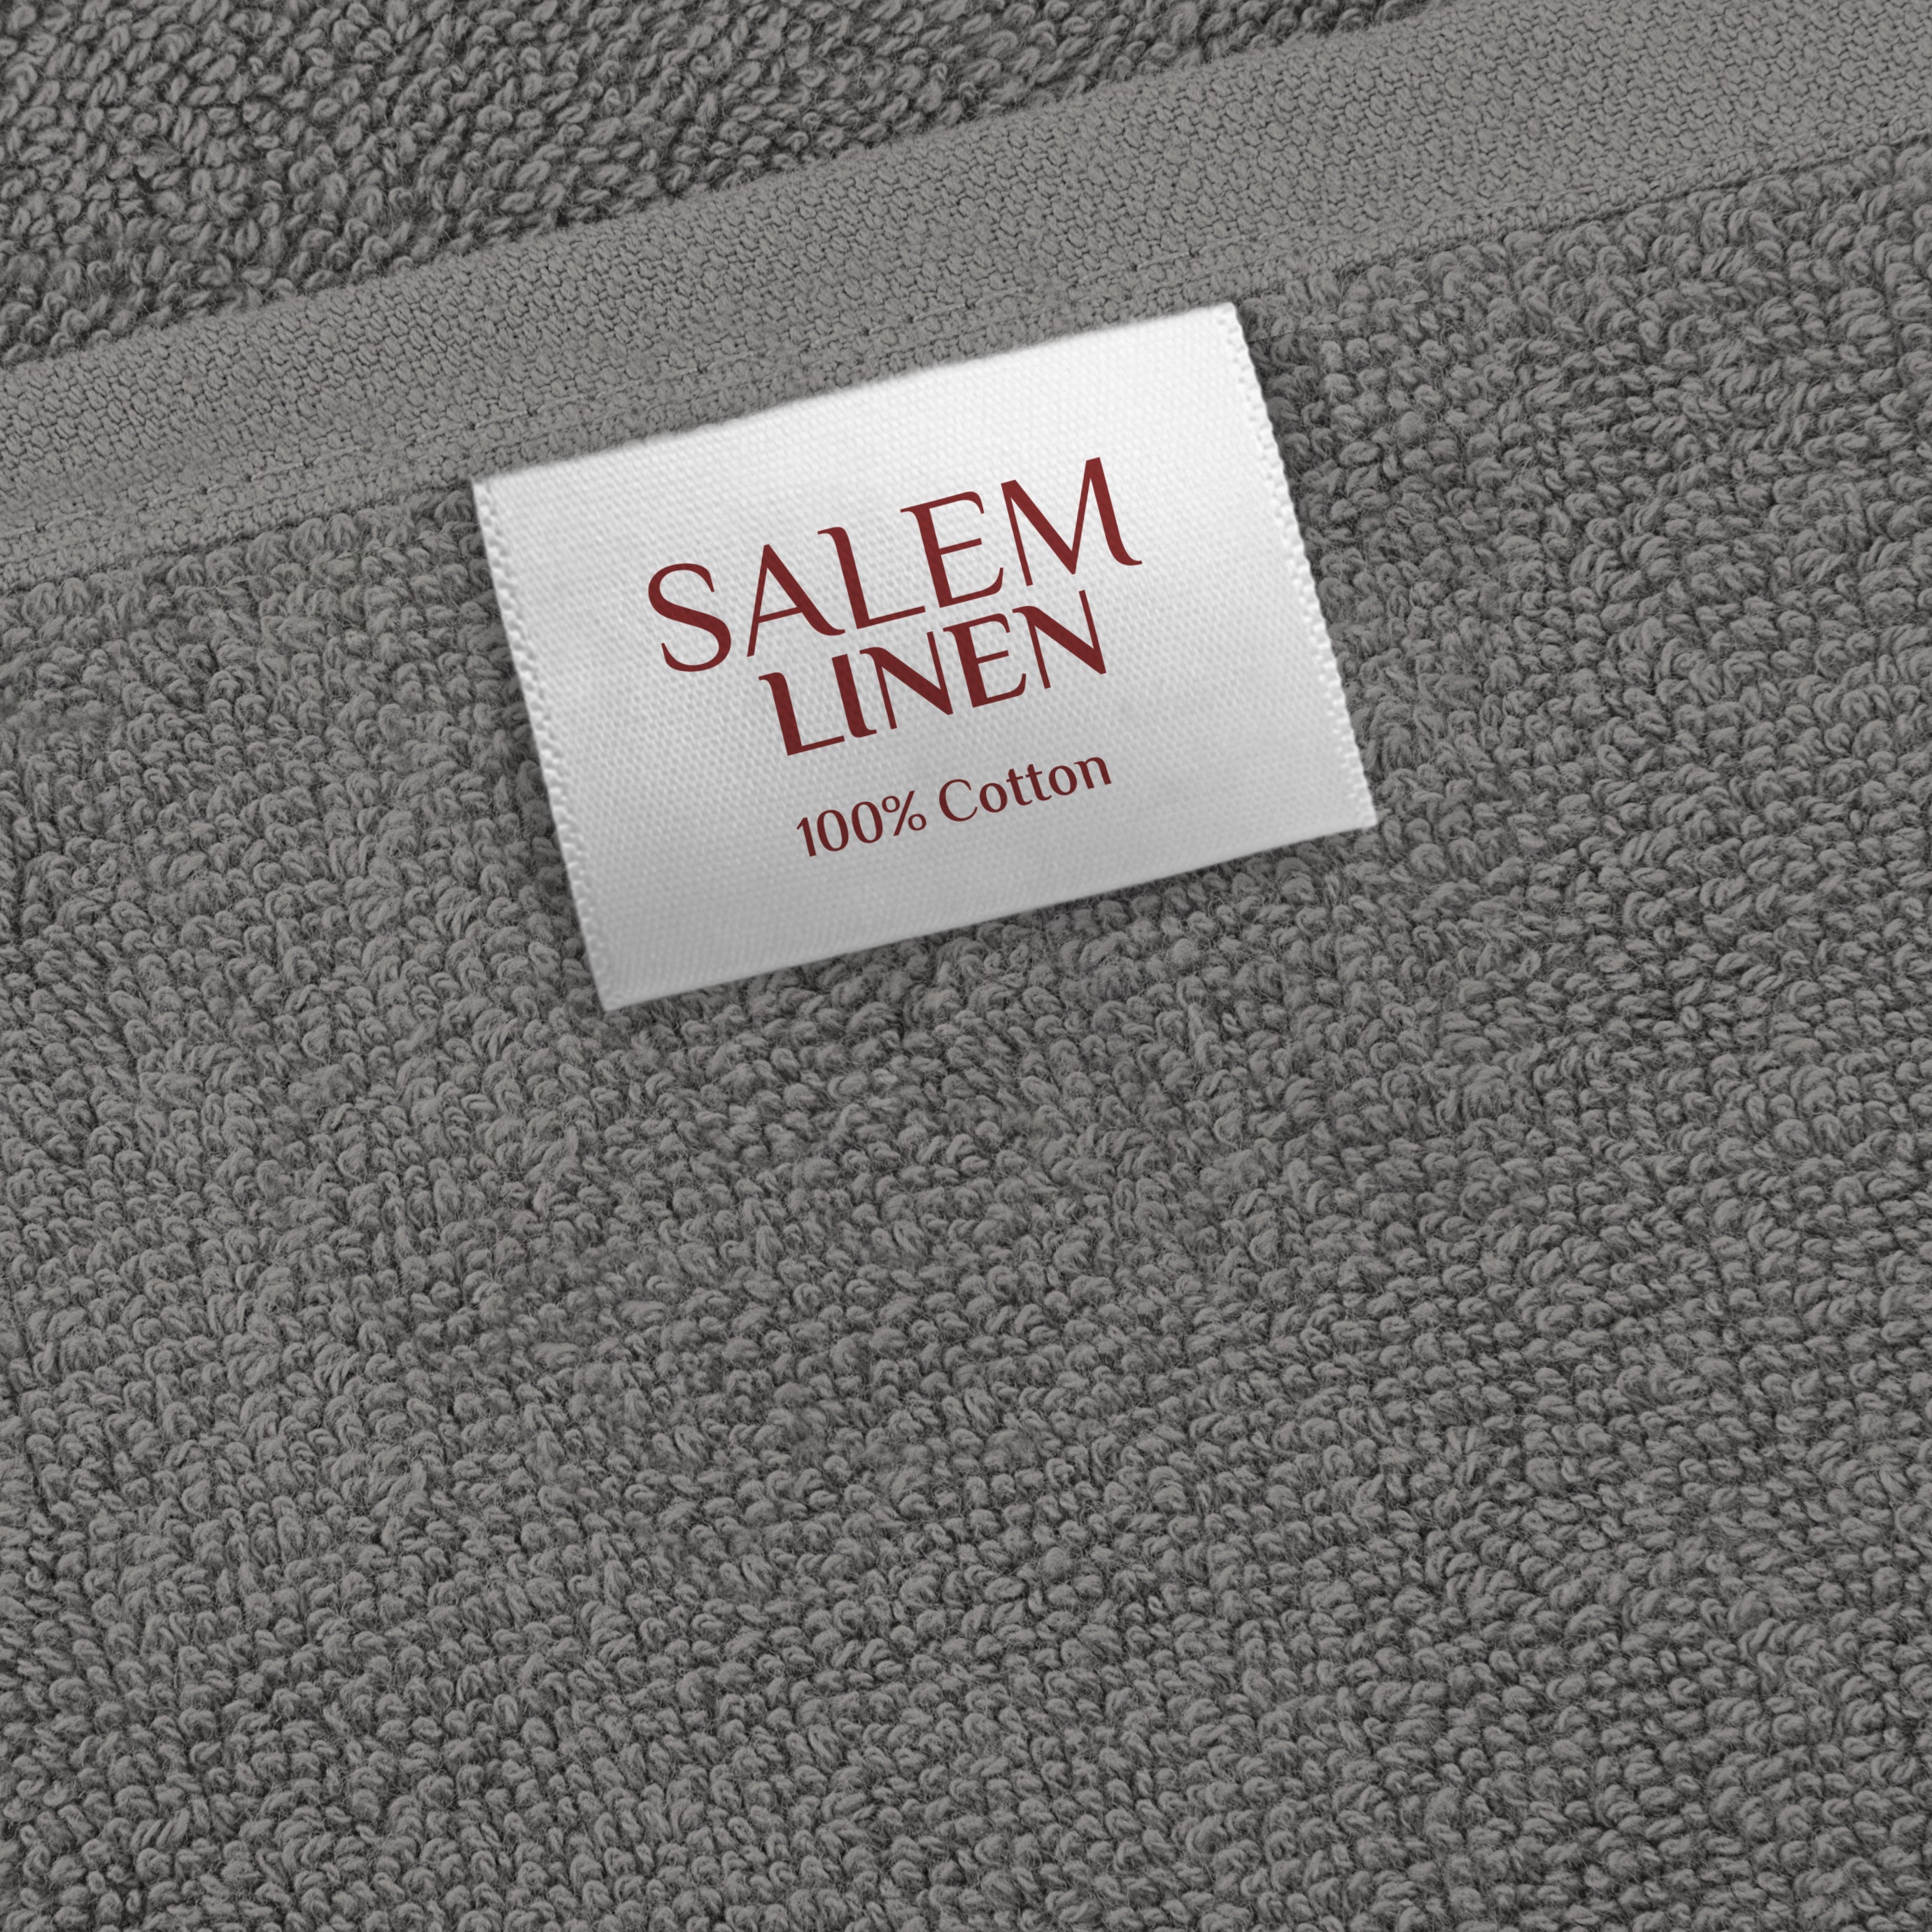 American Soft Linen - Salem 6 Piece Turkish Cotton Luxury Towel Set - Gray - 1